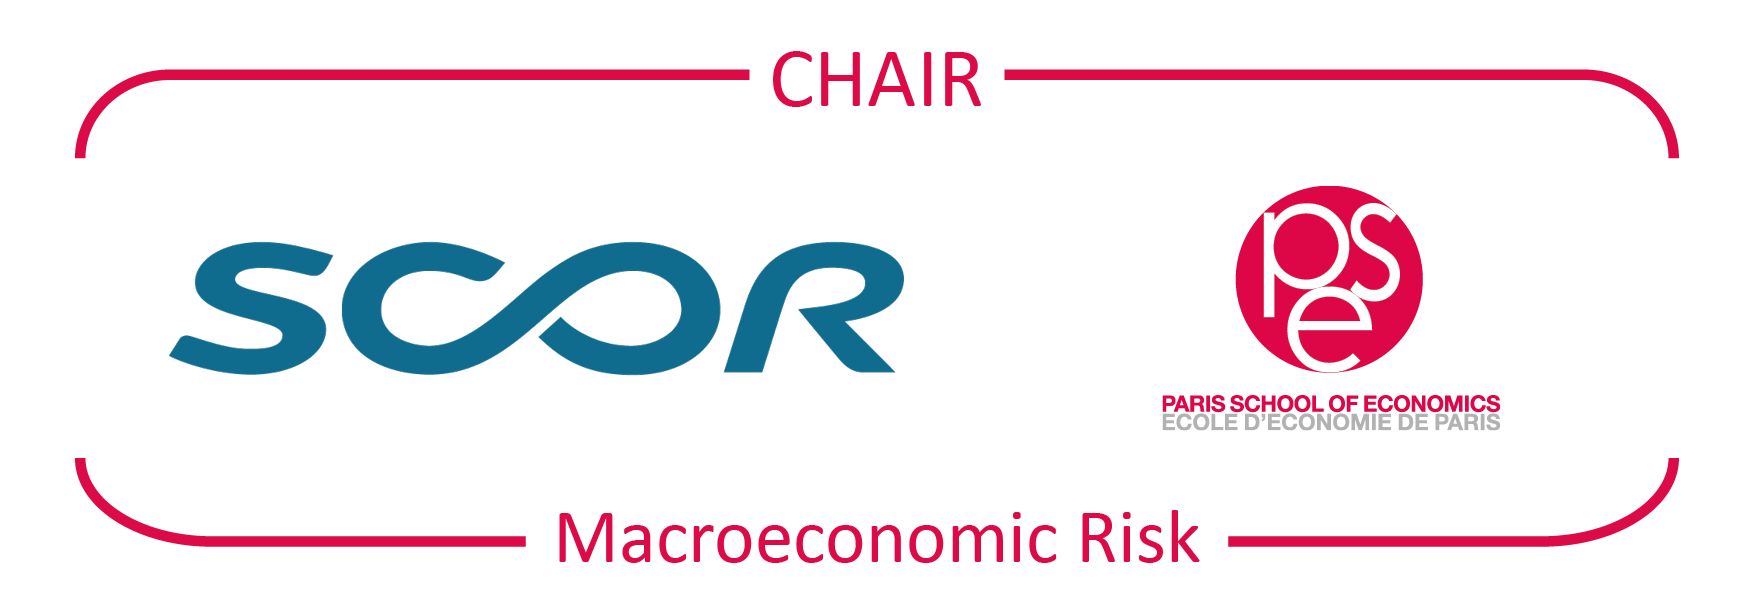 Macroeconomic Risk Chair